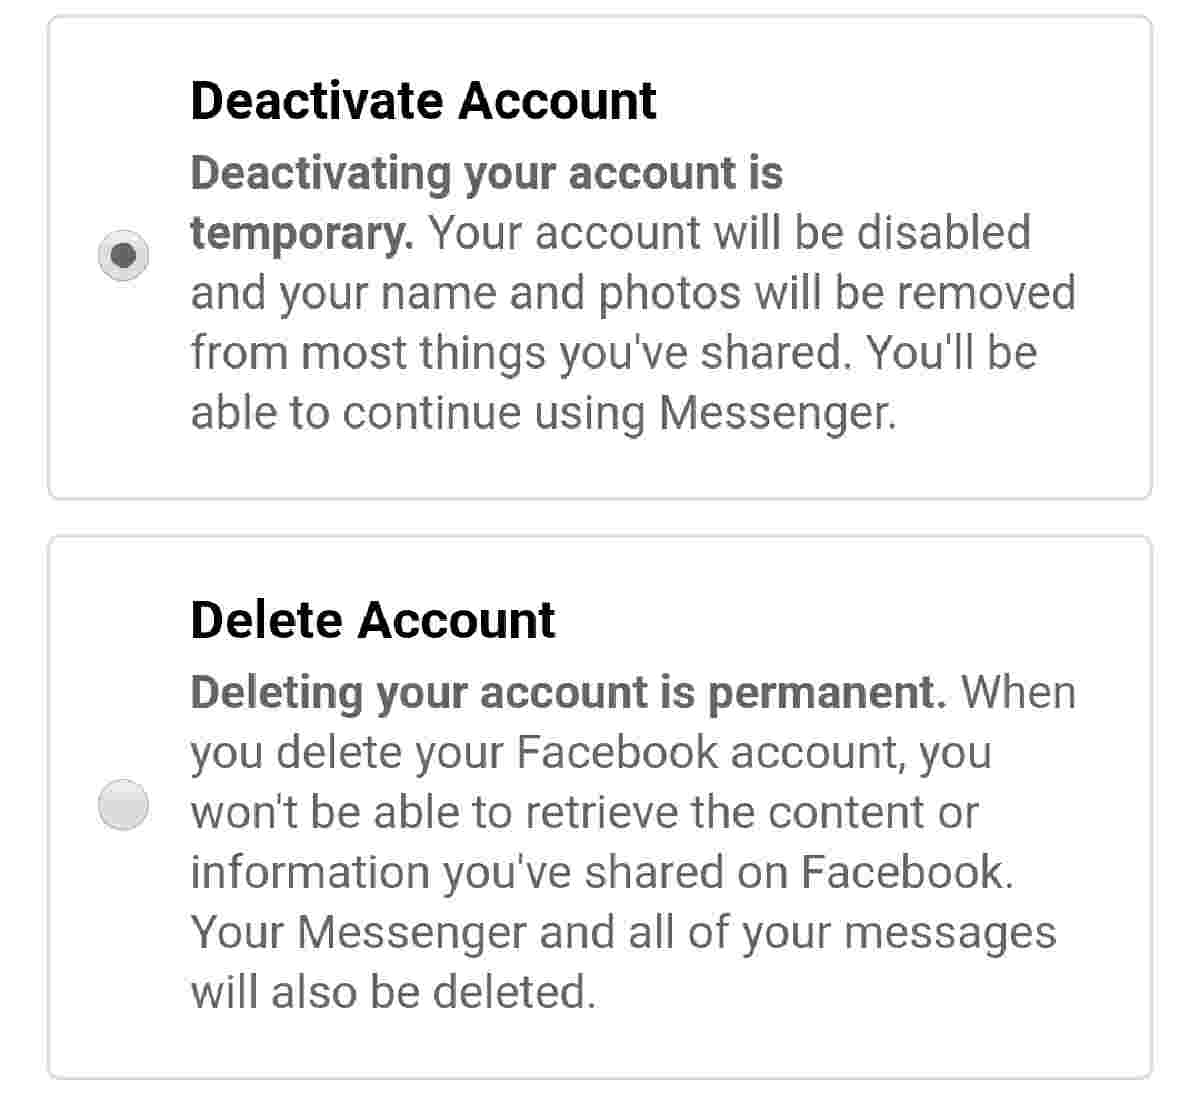 How to delete deactivate facebook account